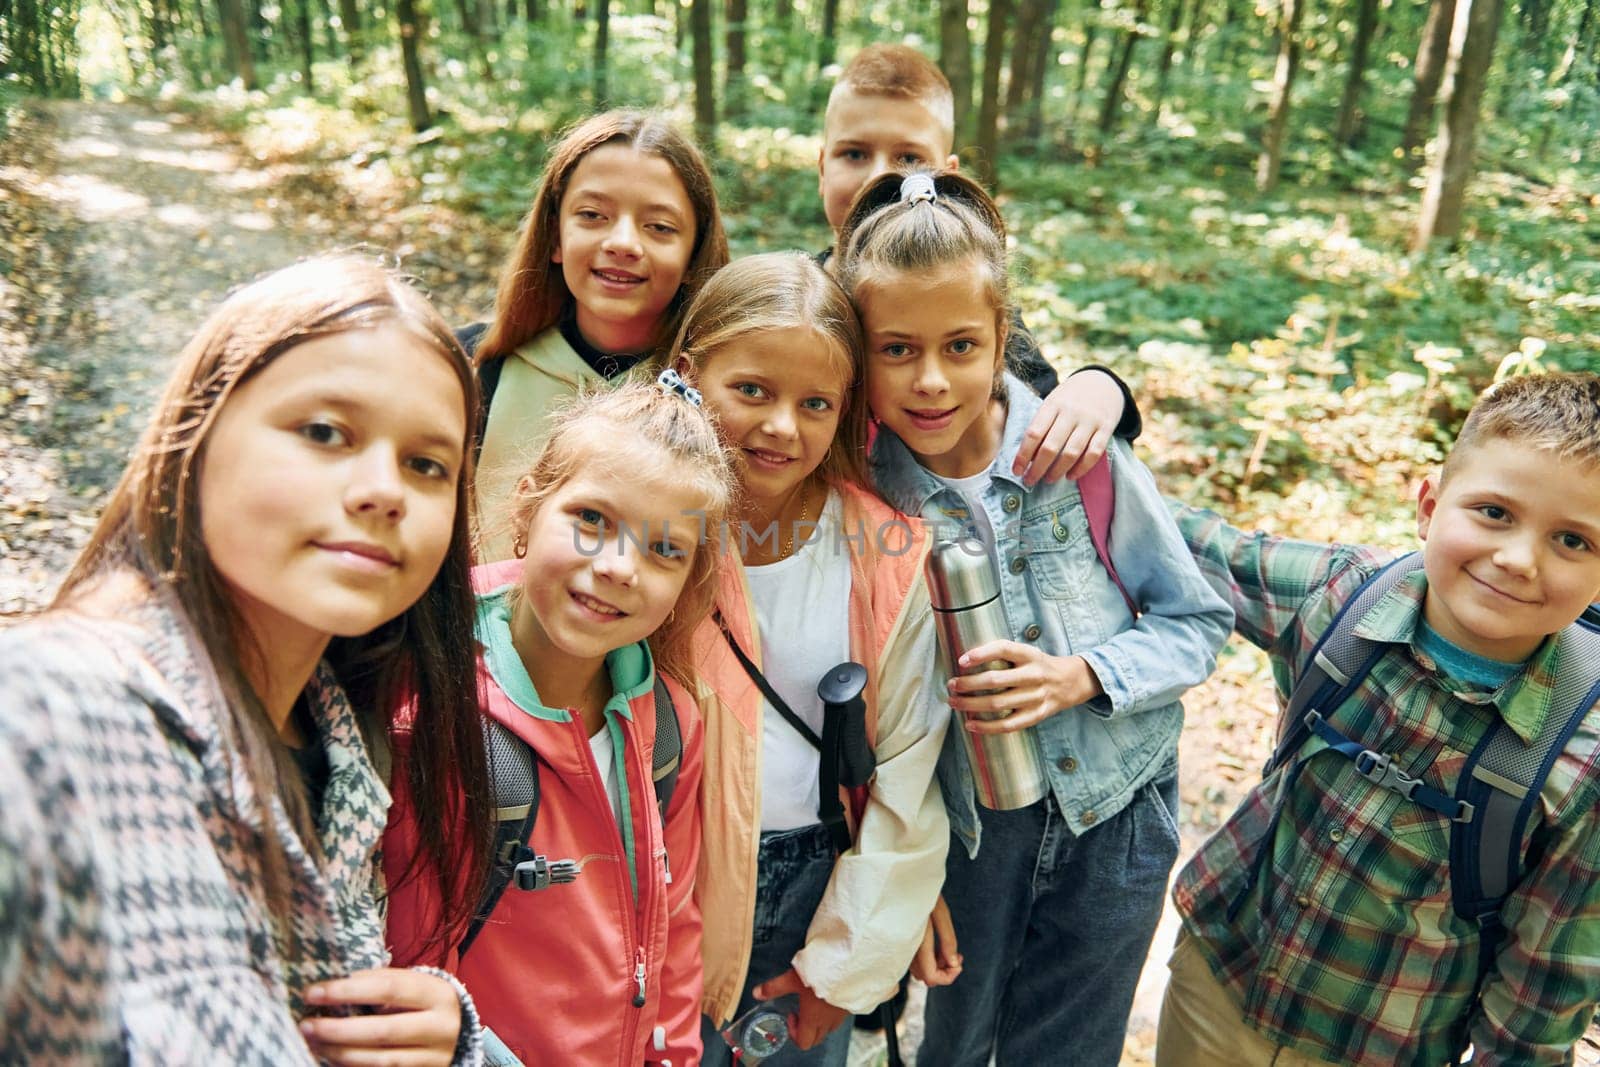 Making selfie. Kids in green forest at summer daytime together.